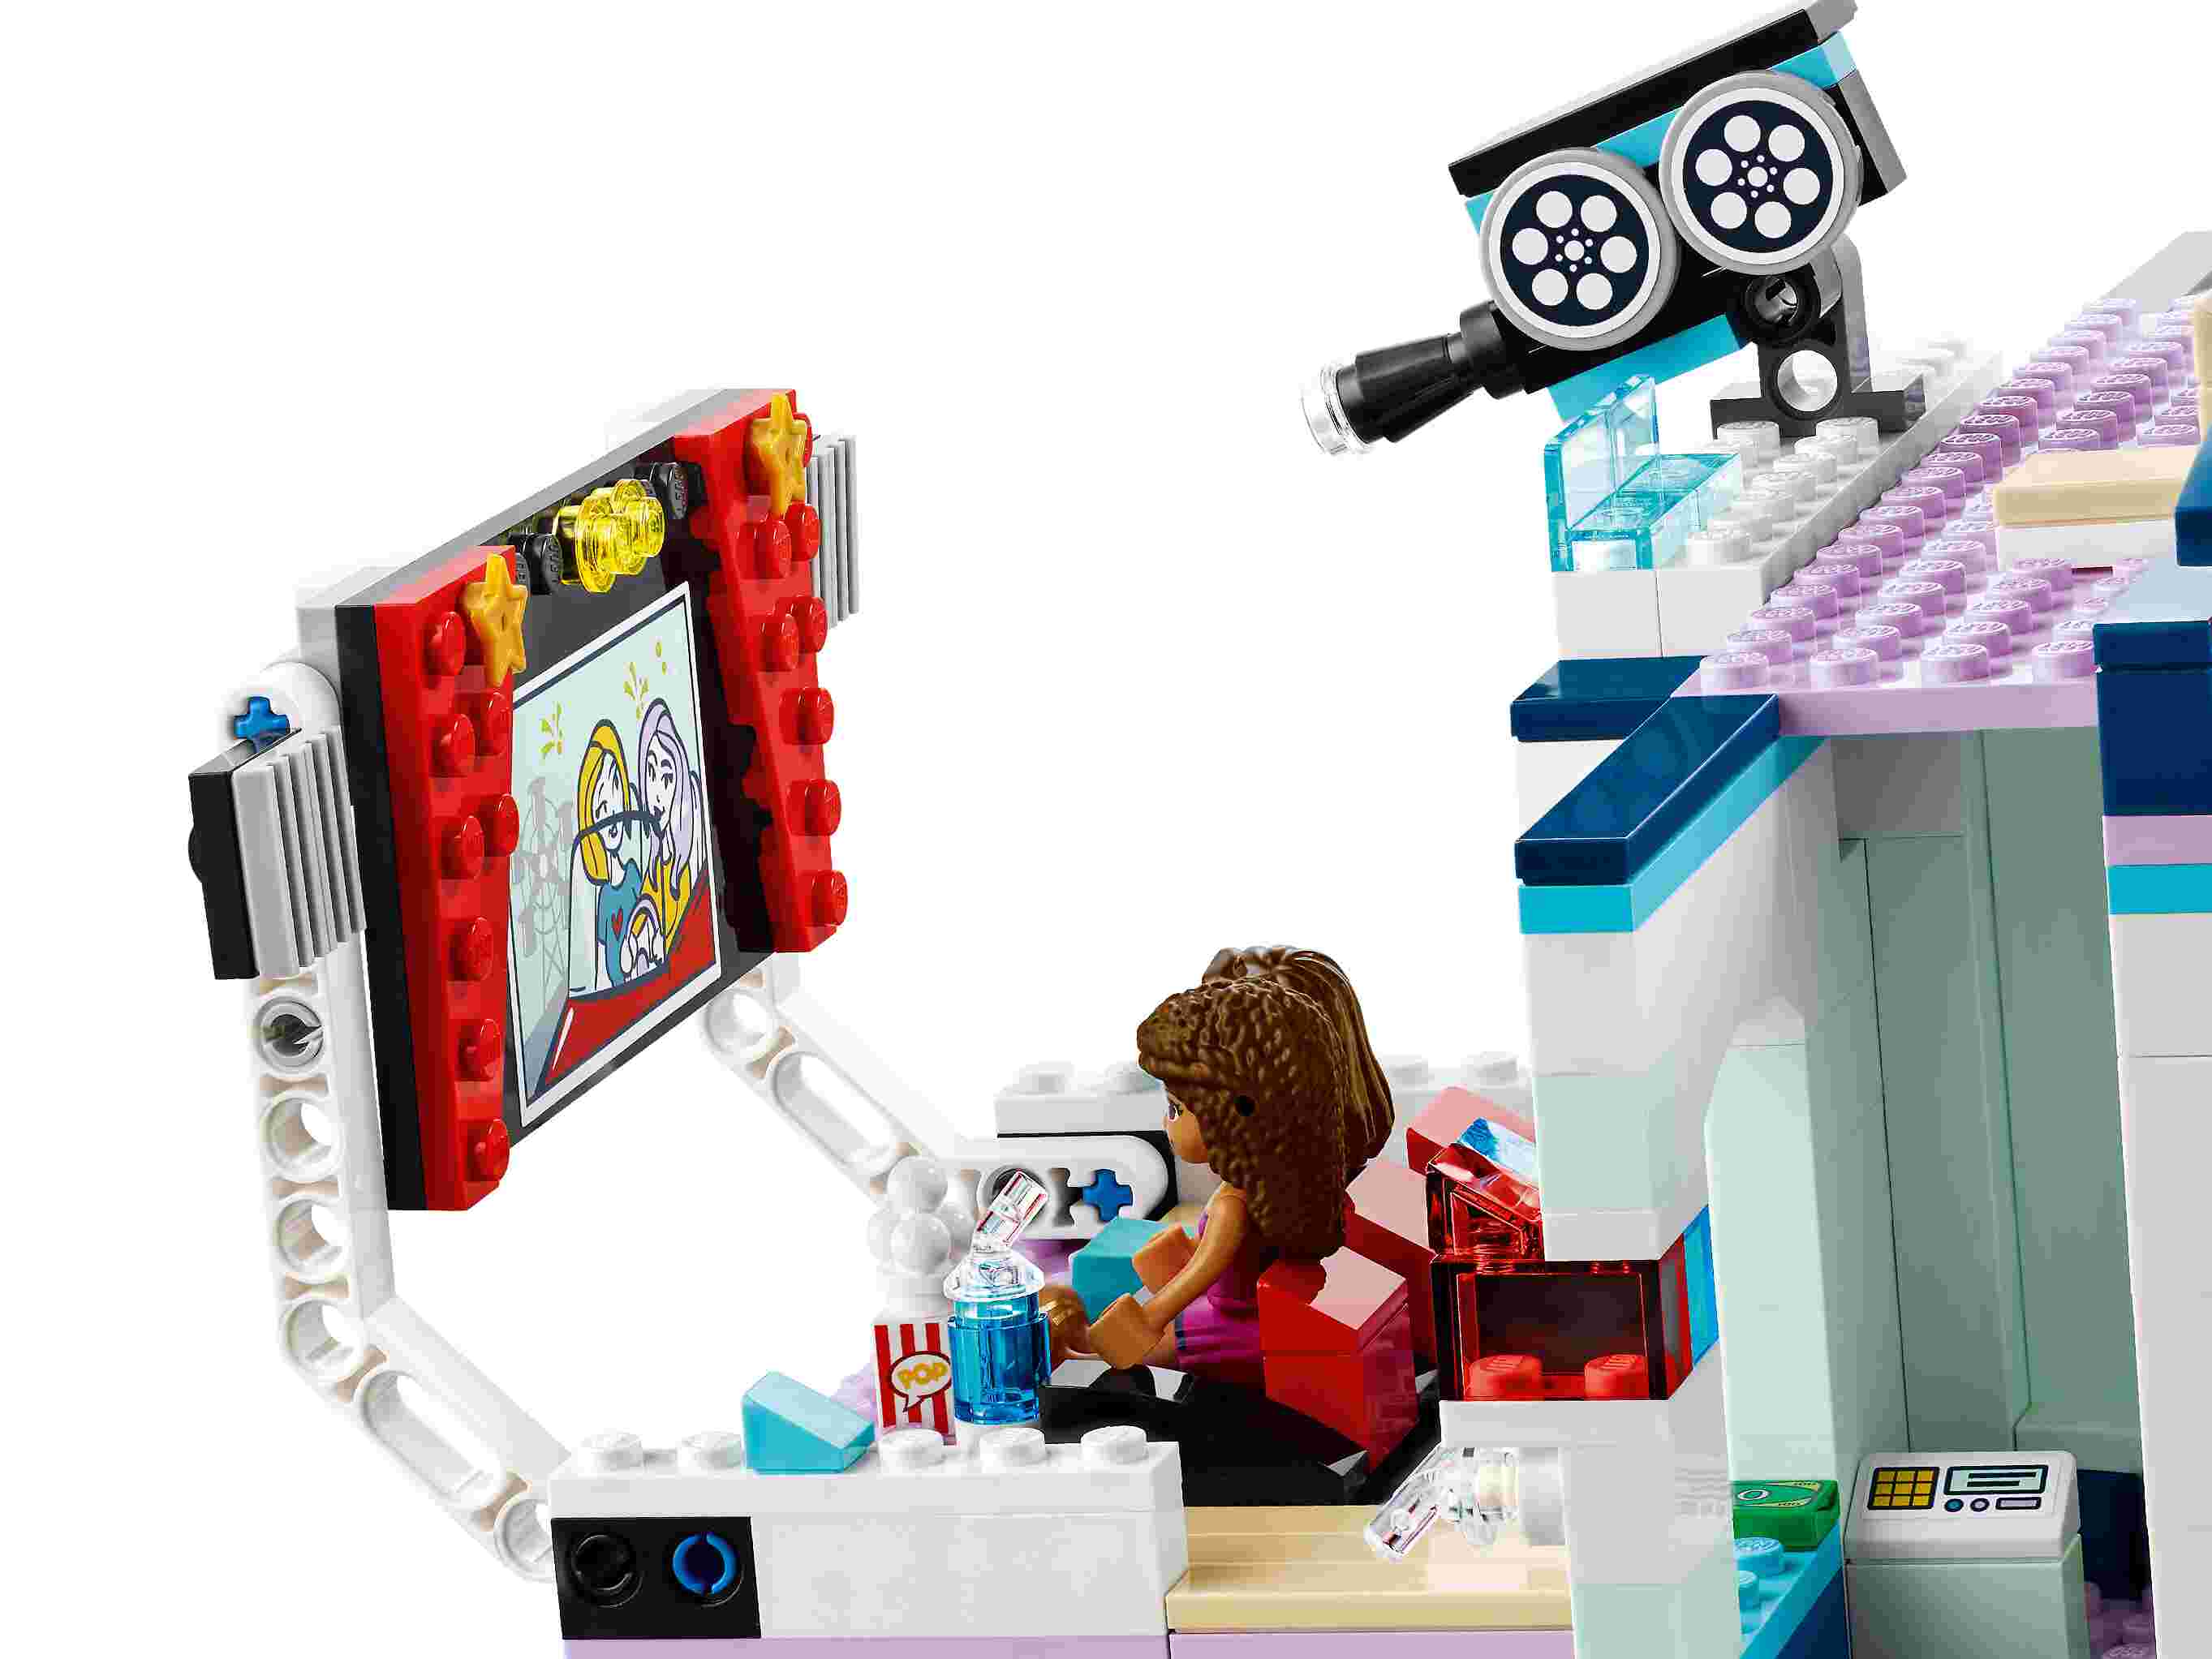 LEGO 41448 Friends Heartlake City Kino Set mit Mini Puppen und Smartphone-Halter